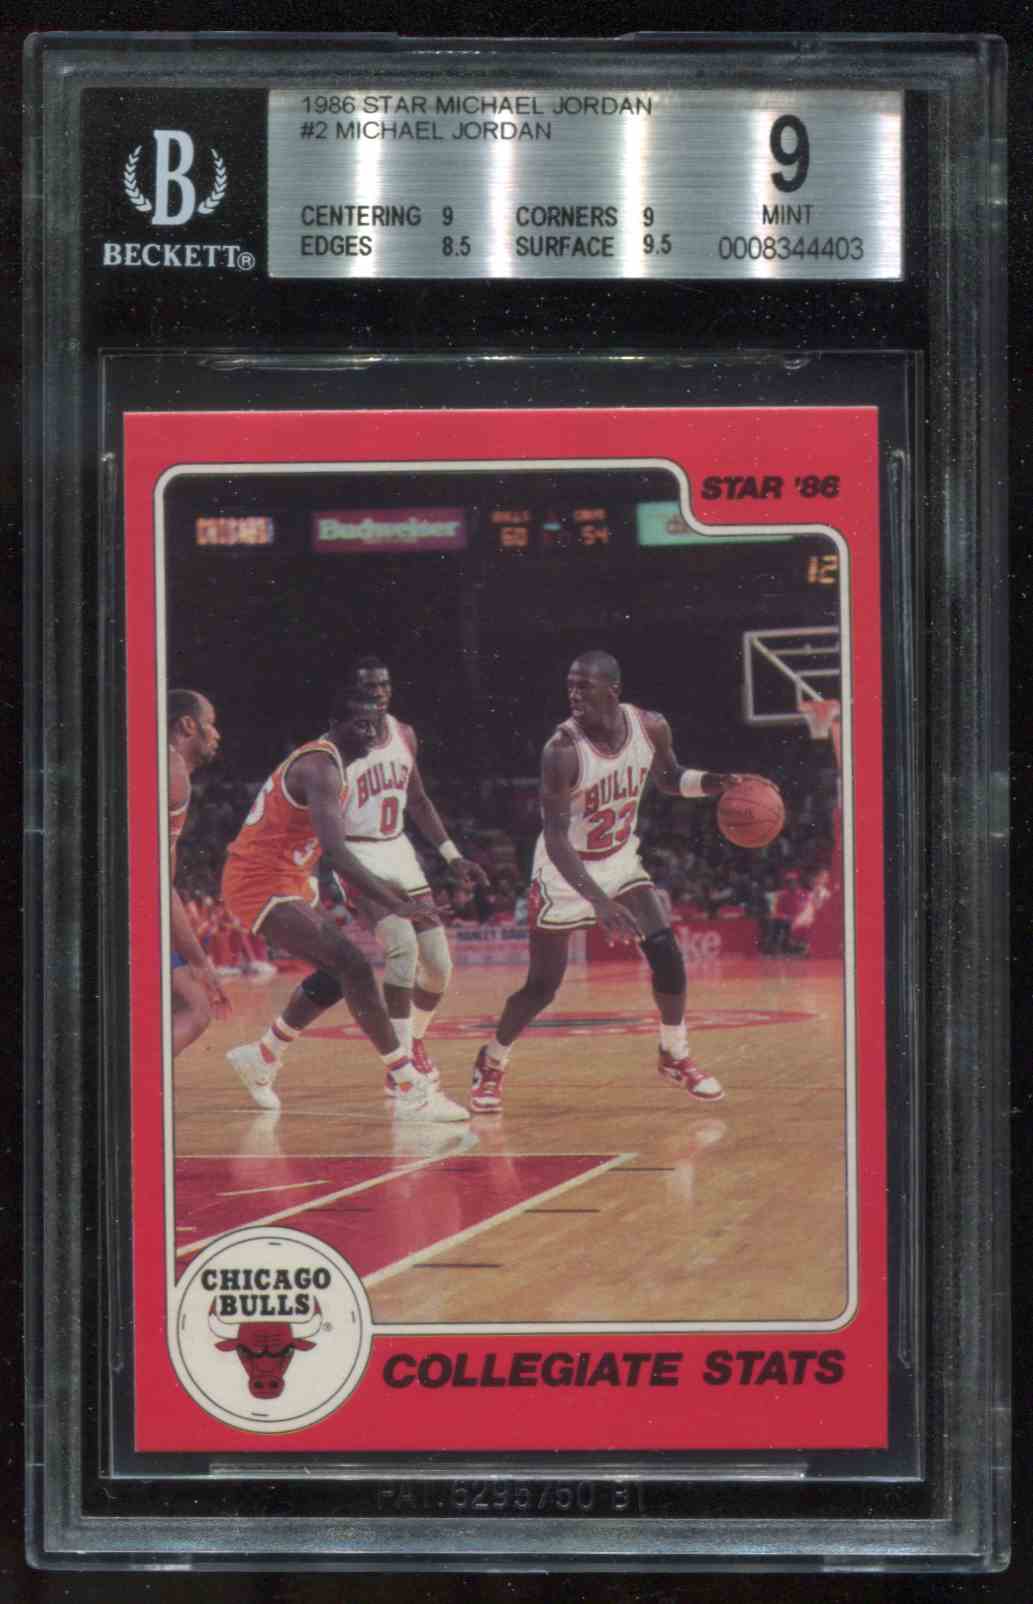 1986 Star Michael Jordan Set - Star Basketball Cards